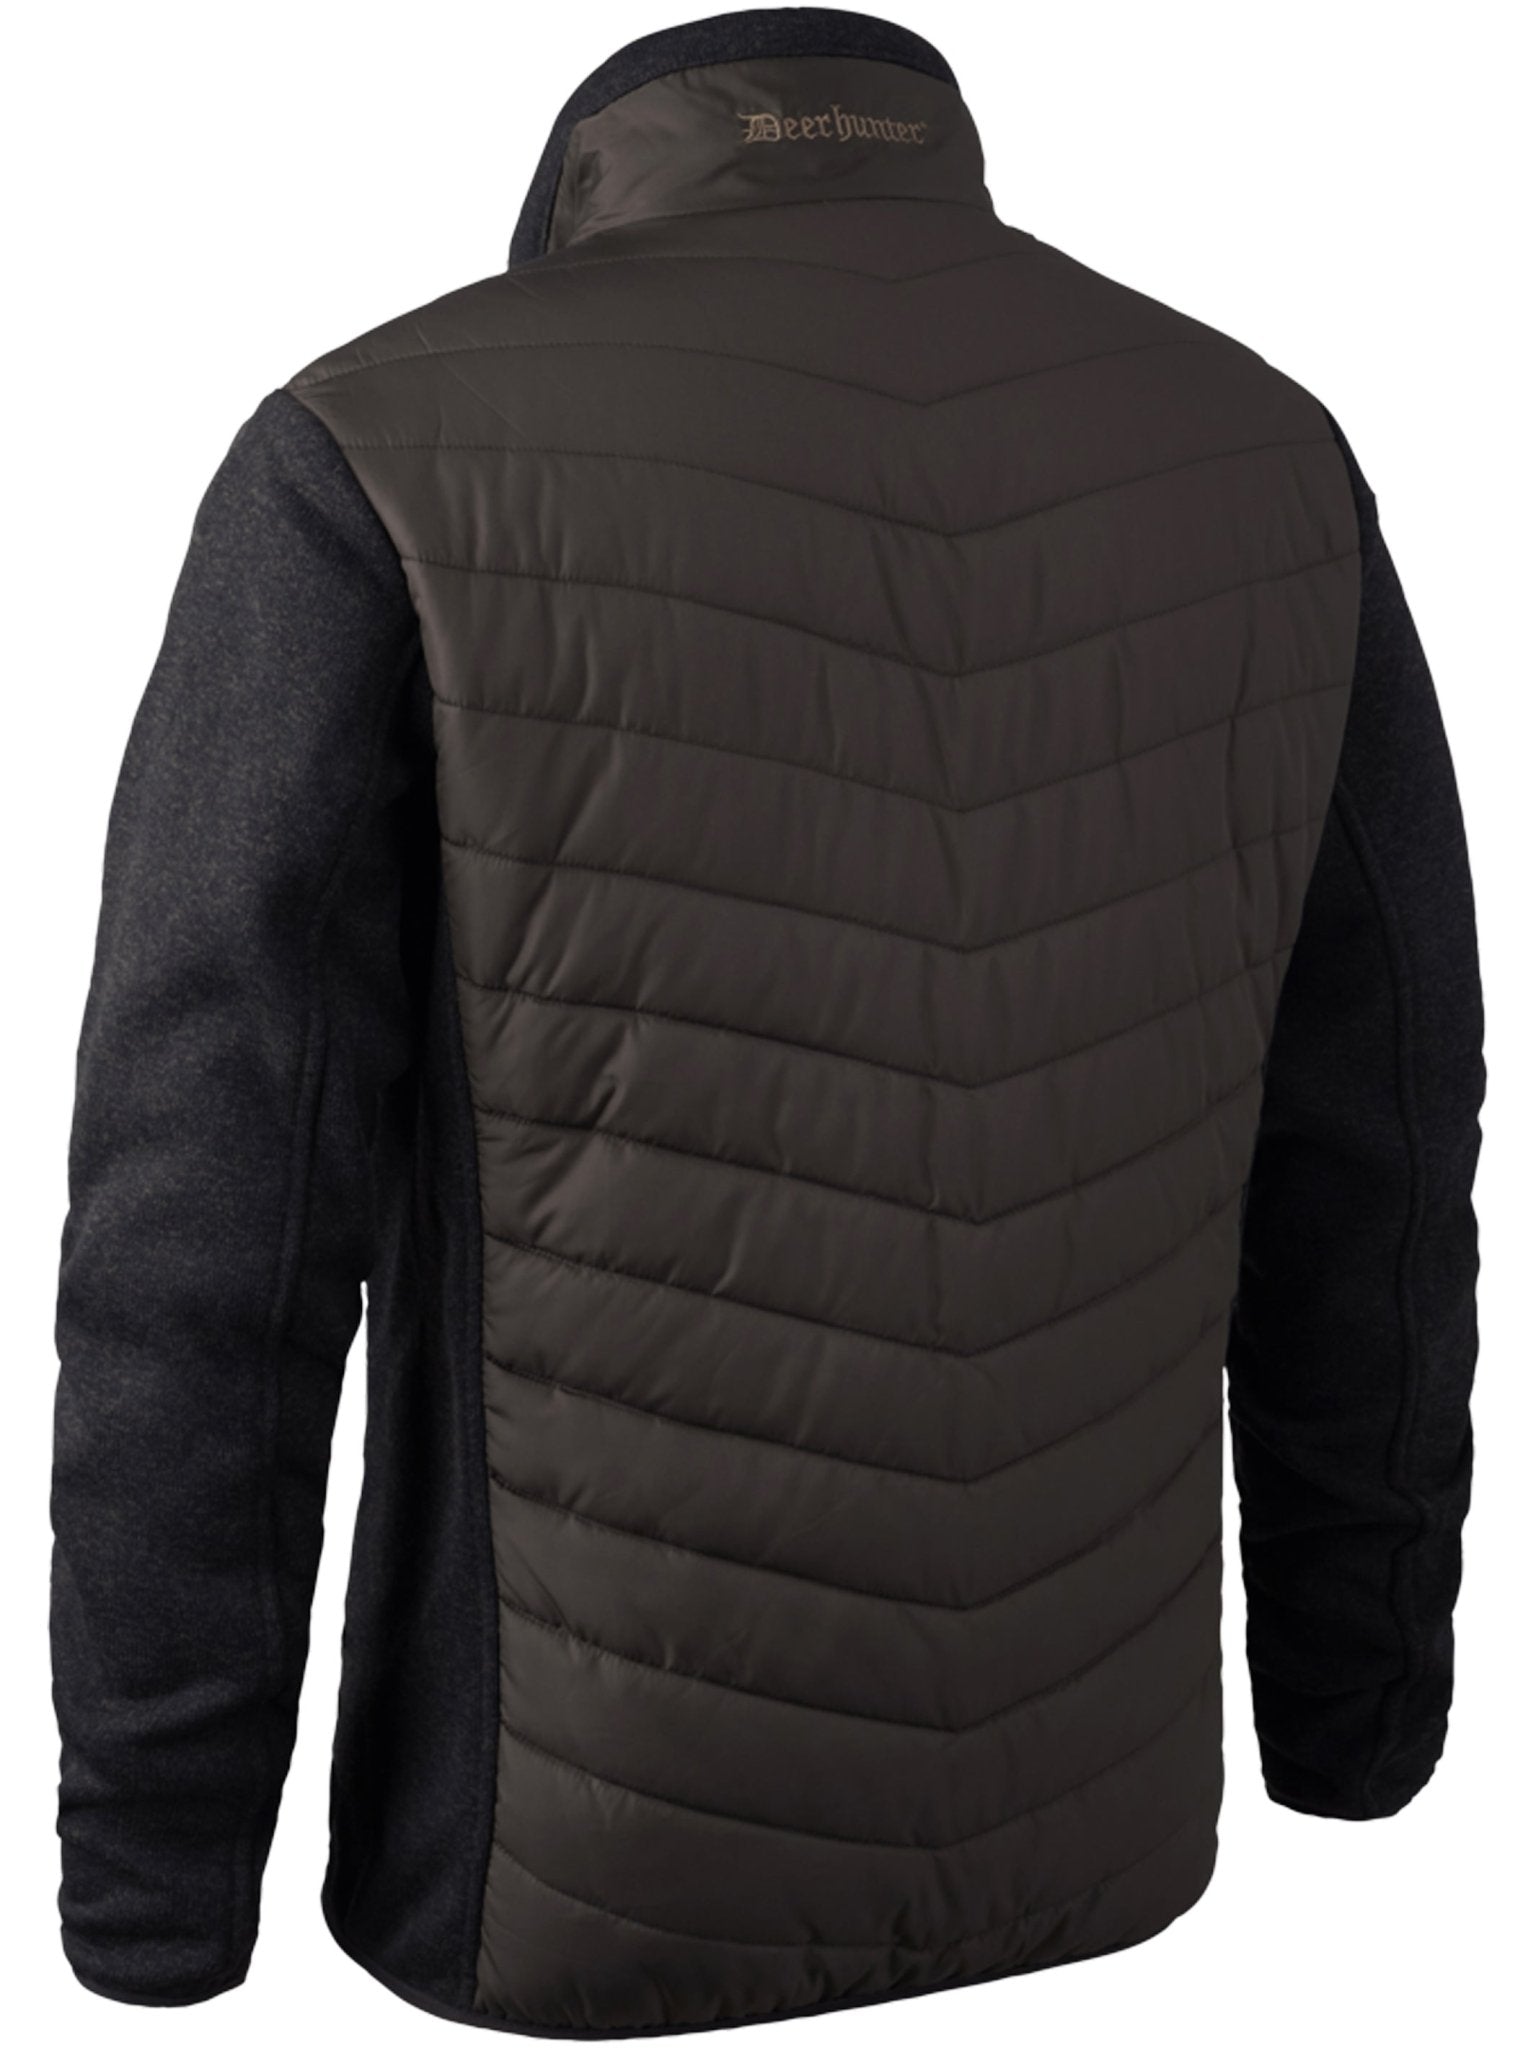 4elementsclothingDeerhunterDeerhunter - Moor Padded Jacket with KnitOuterwear5572-393-S